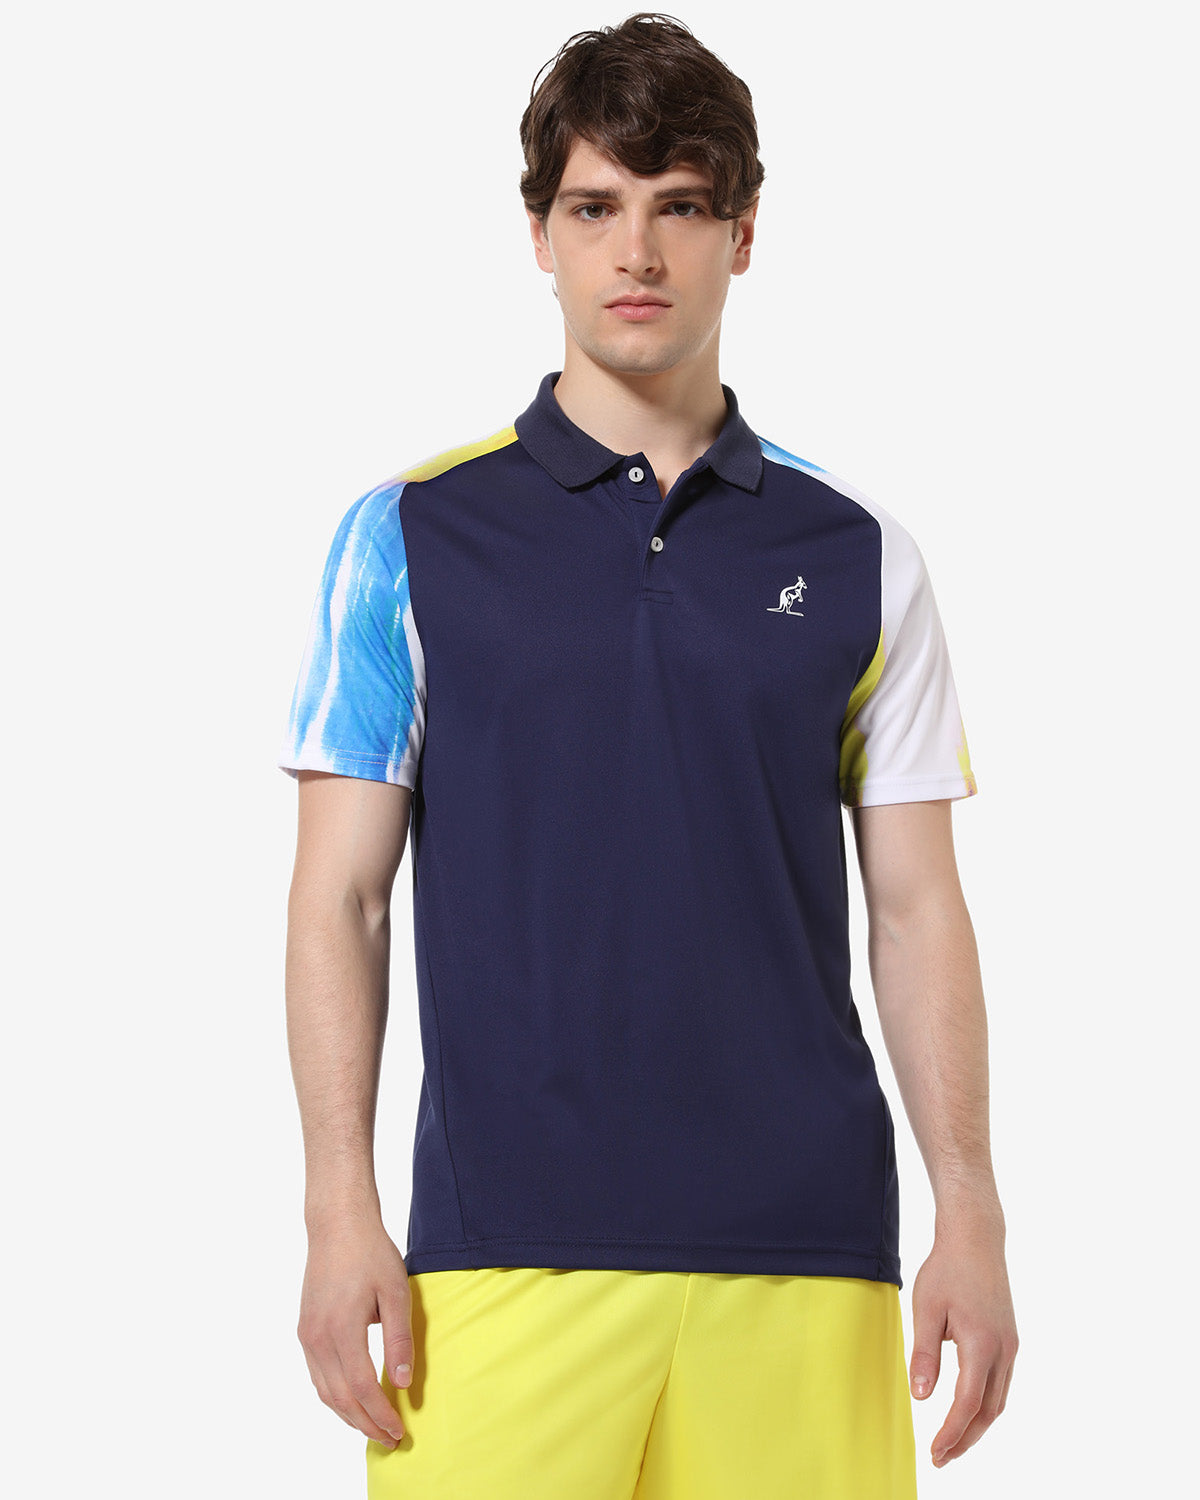 Blaze Polo Shirt: Australian Tennis